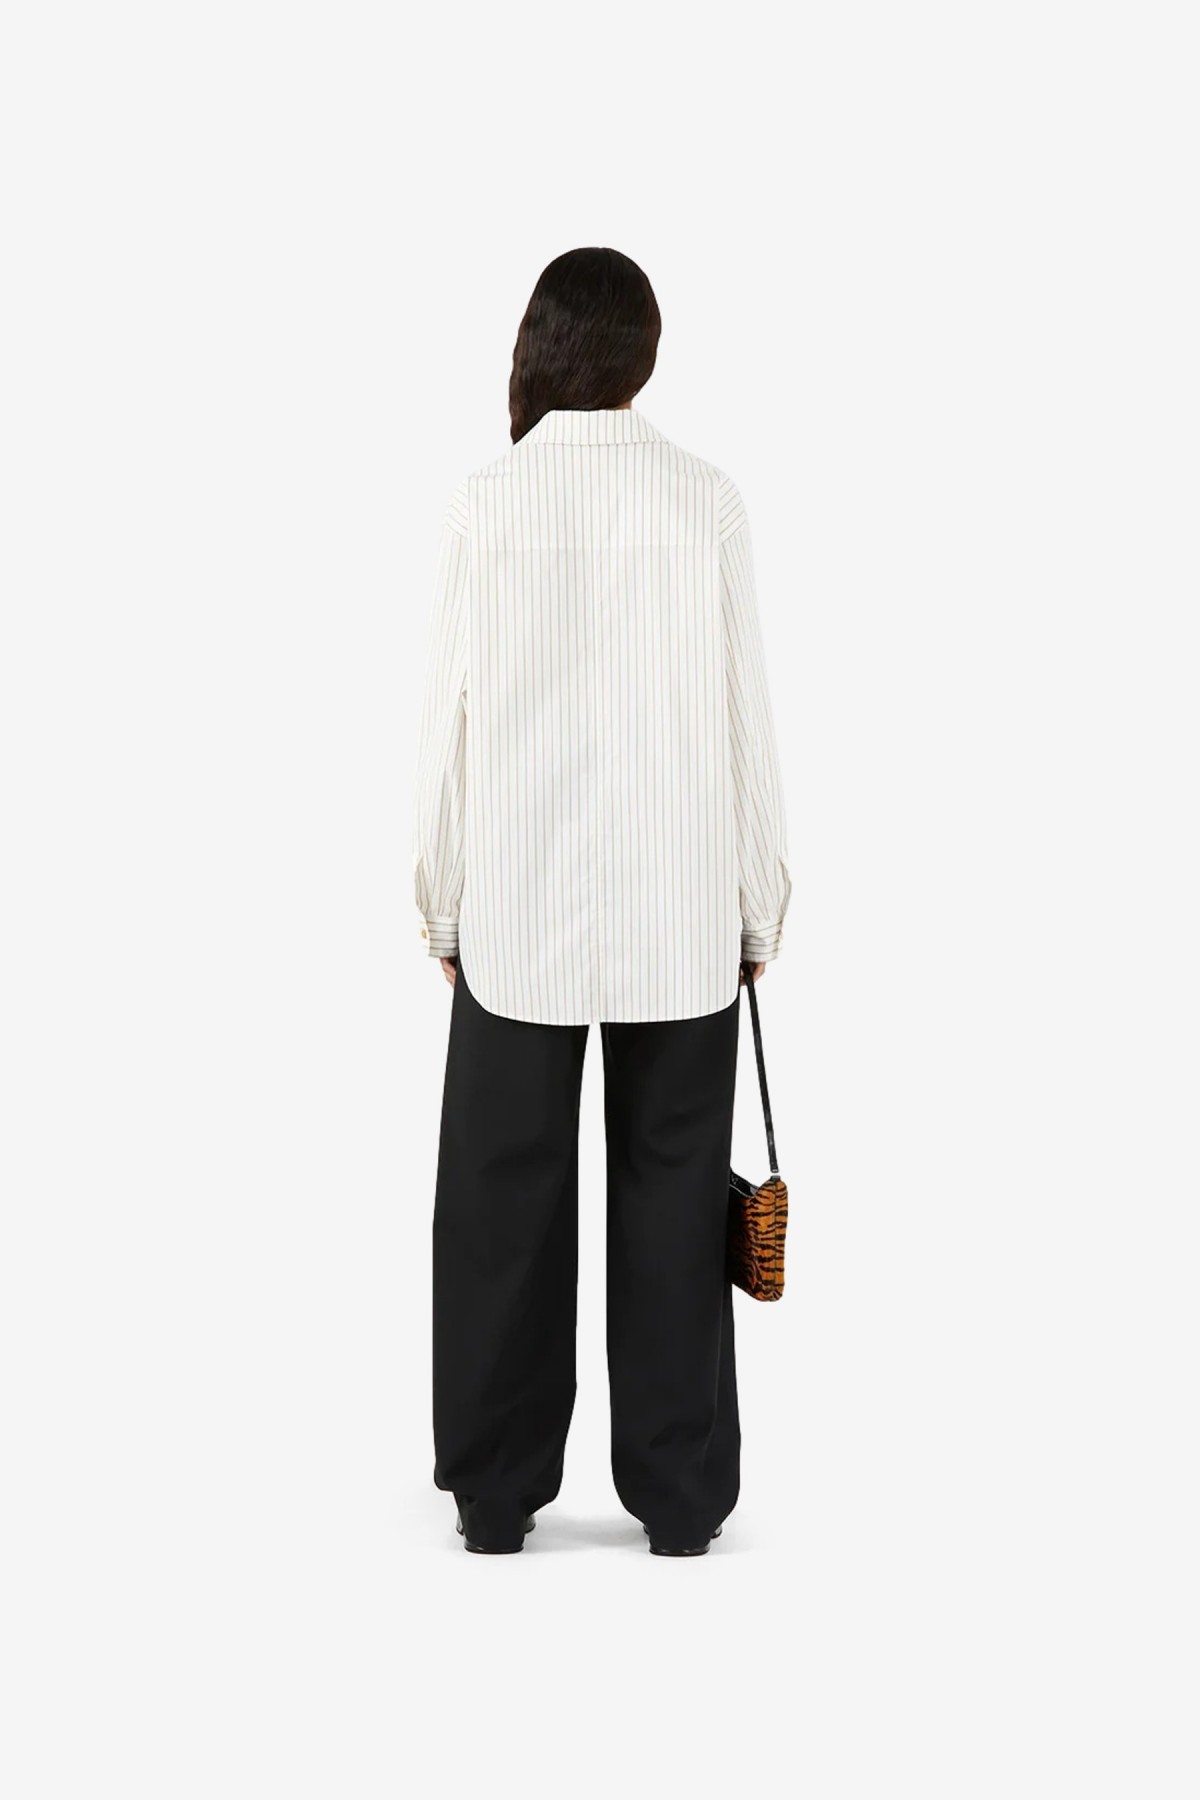 Rejina Pyo Caprice Shirt in Cotton Blend Stripe